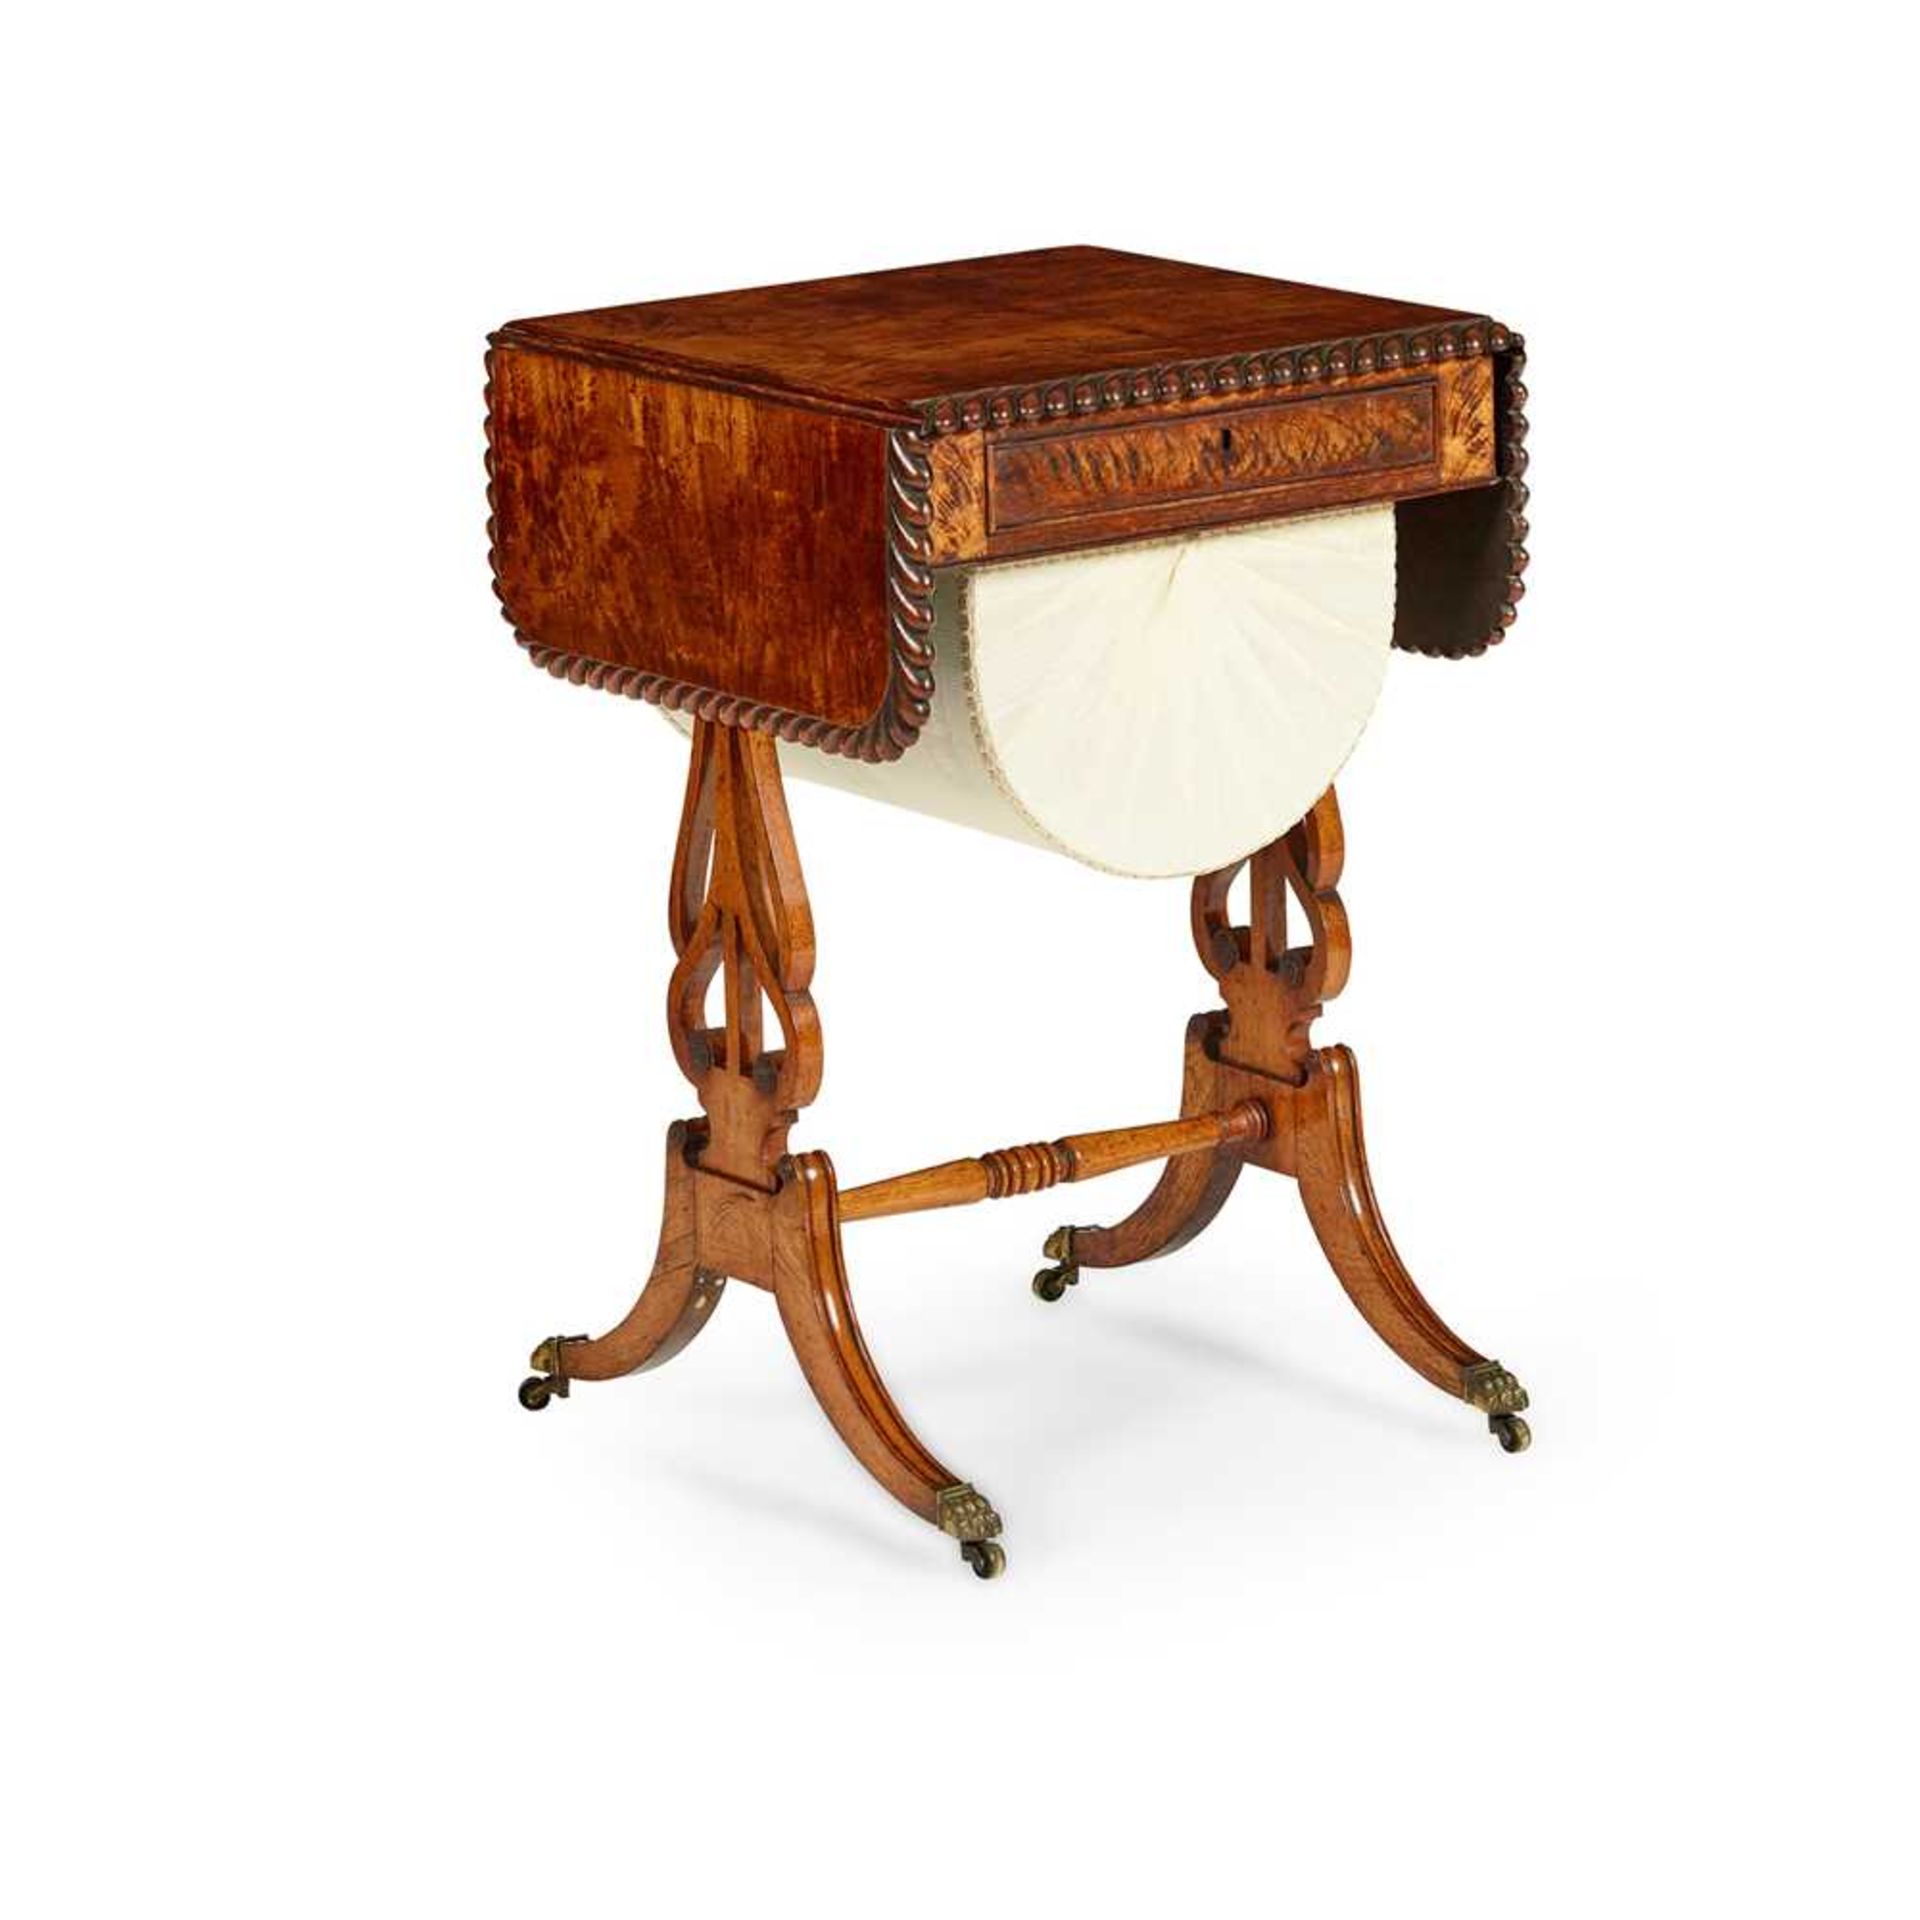 A FINE REGENCY POLLARD OAK WORK TABLE, ATTRIBUTED TO JAMES MEIN OF KELSO EARLY 19TH CENTURY